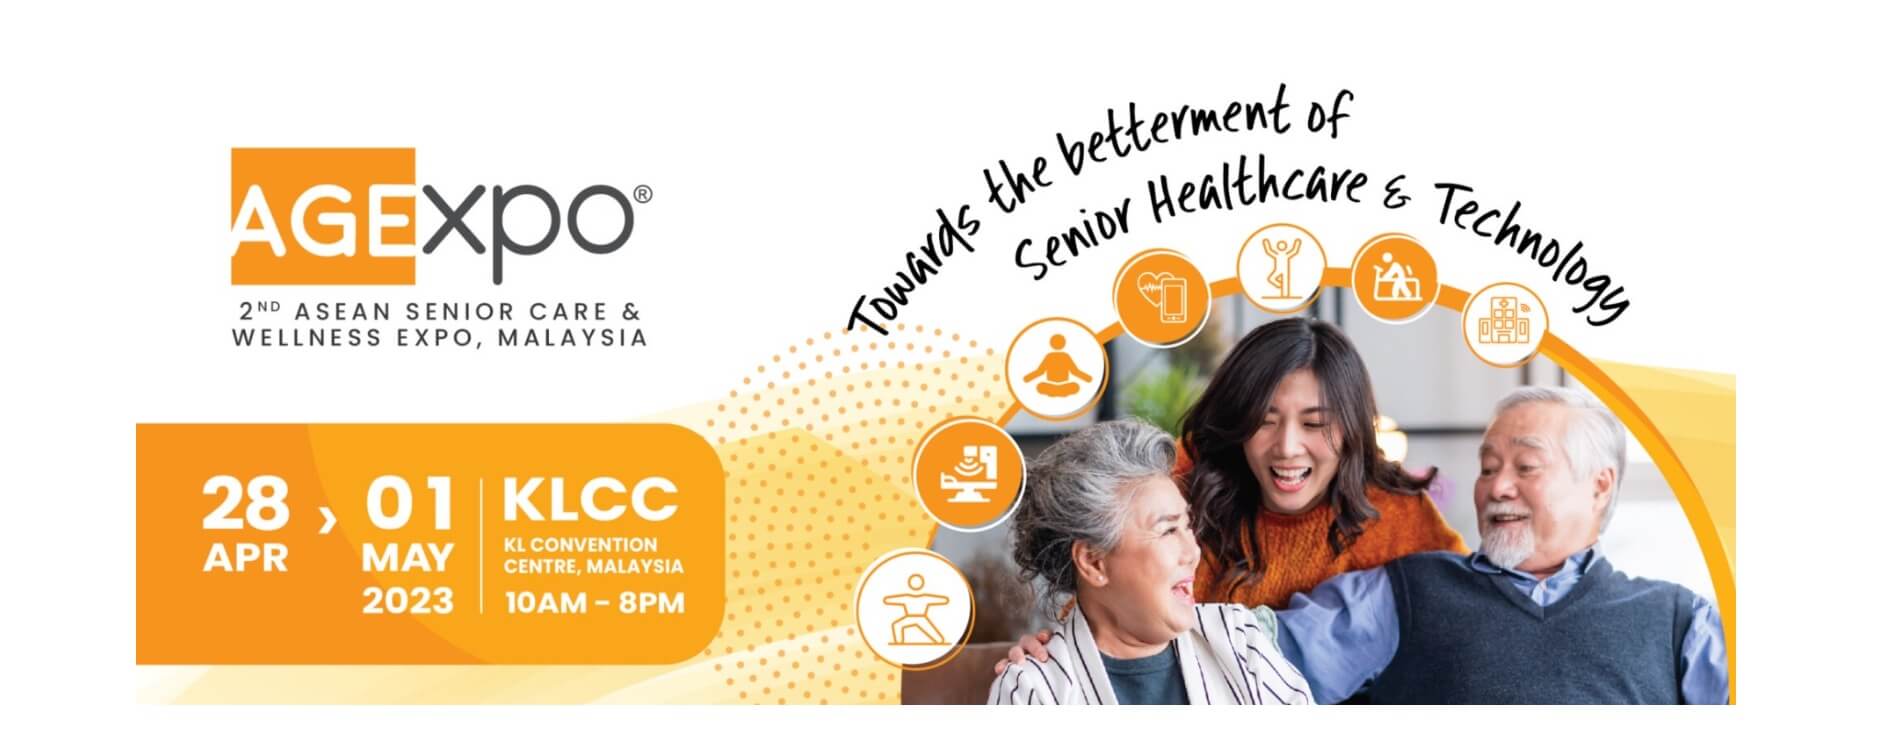 AGEXPO - 2nd ASEAN Senior Care & Wellness Expo Malaysia